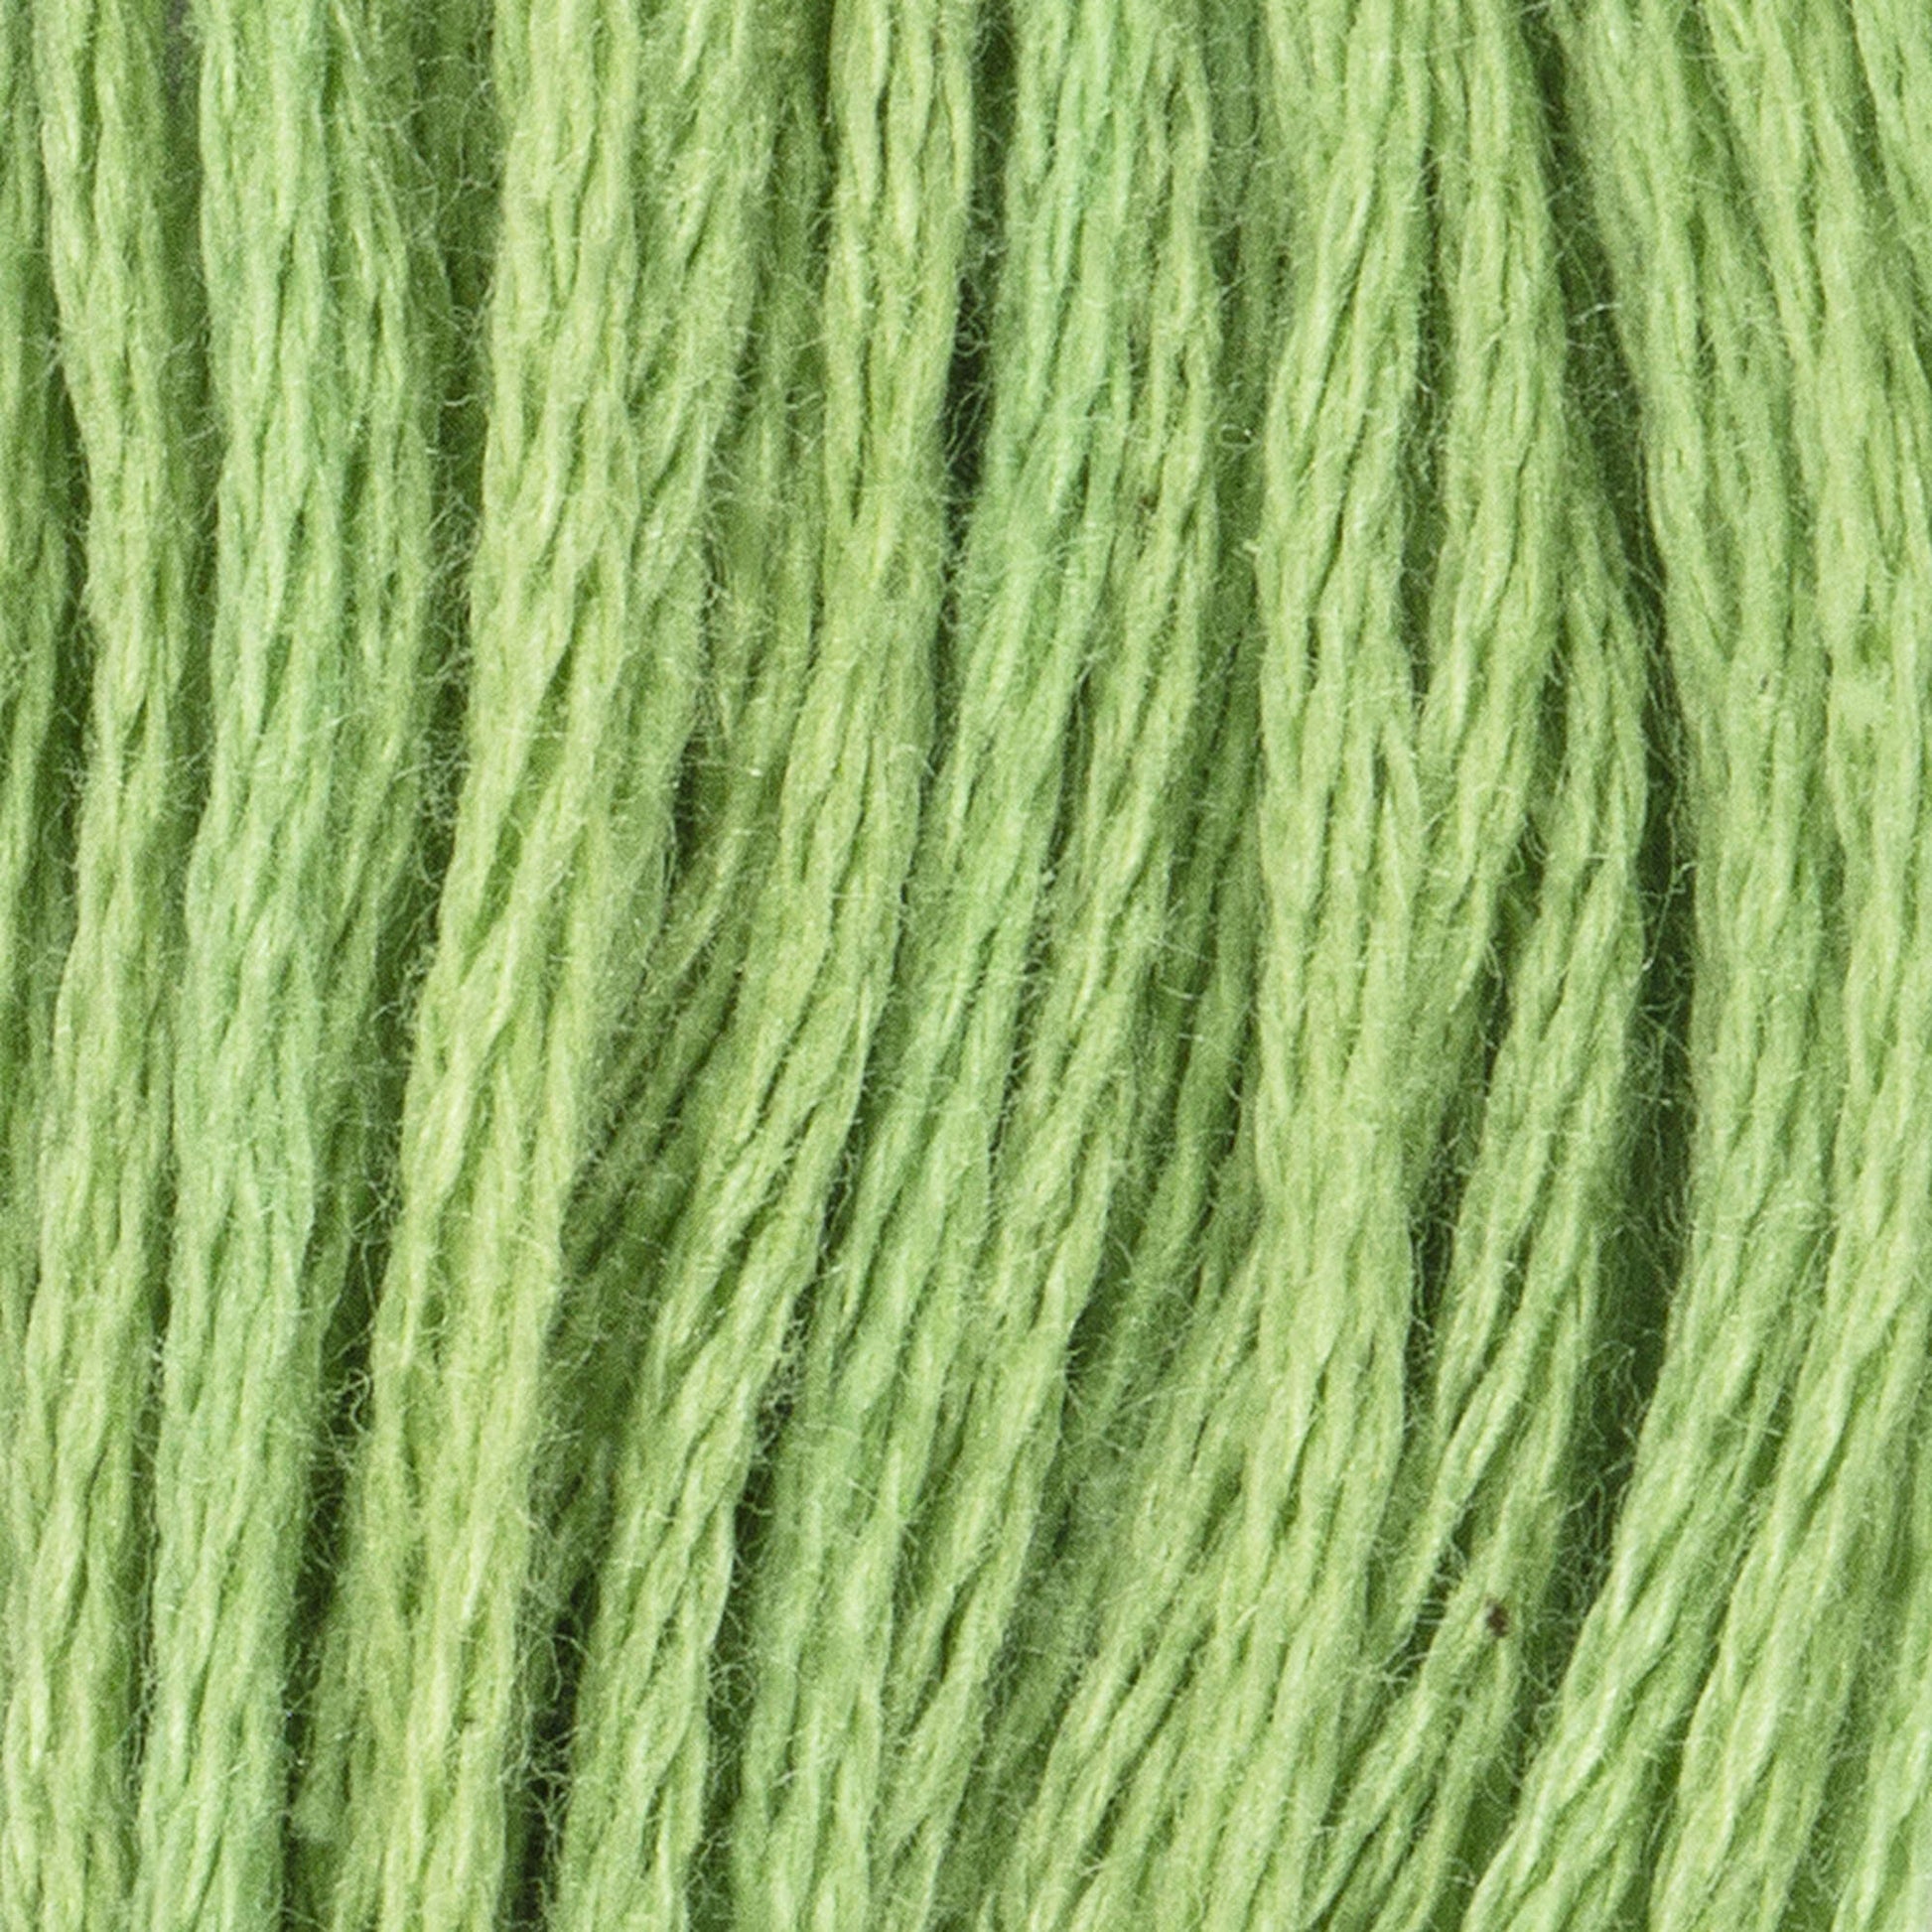 Coats & Clark Cotton Embroidery Floss Nile Green Light